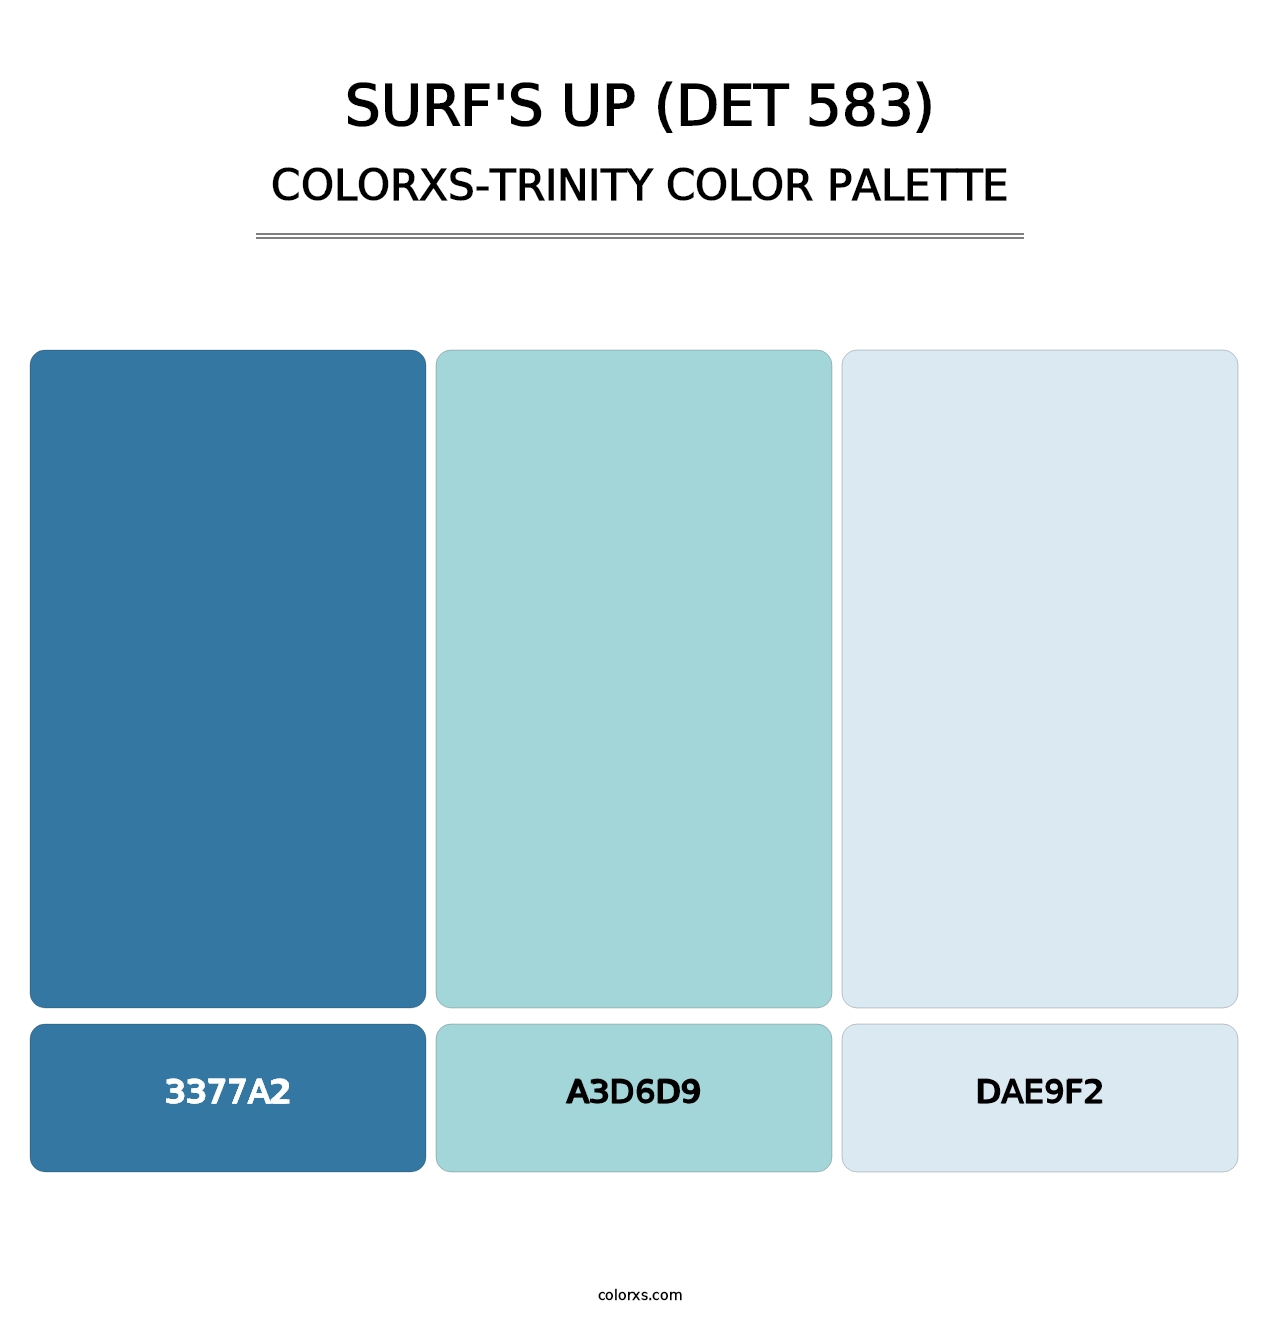 Surf's Up (DET 583) - Colorxs Trinity Palette